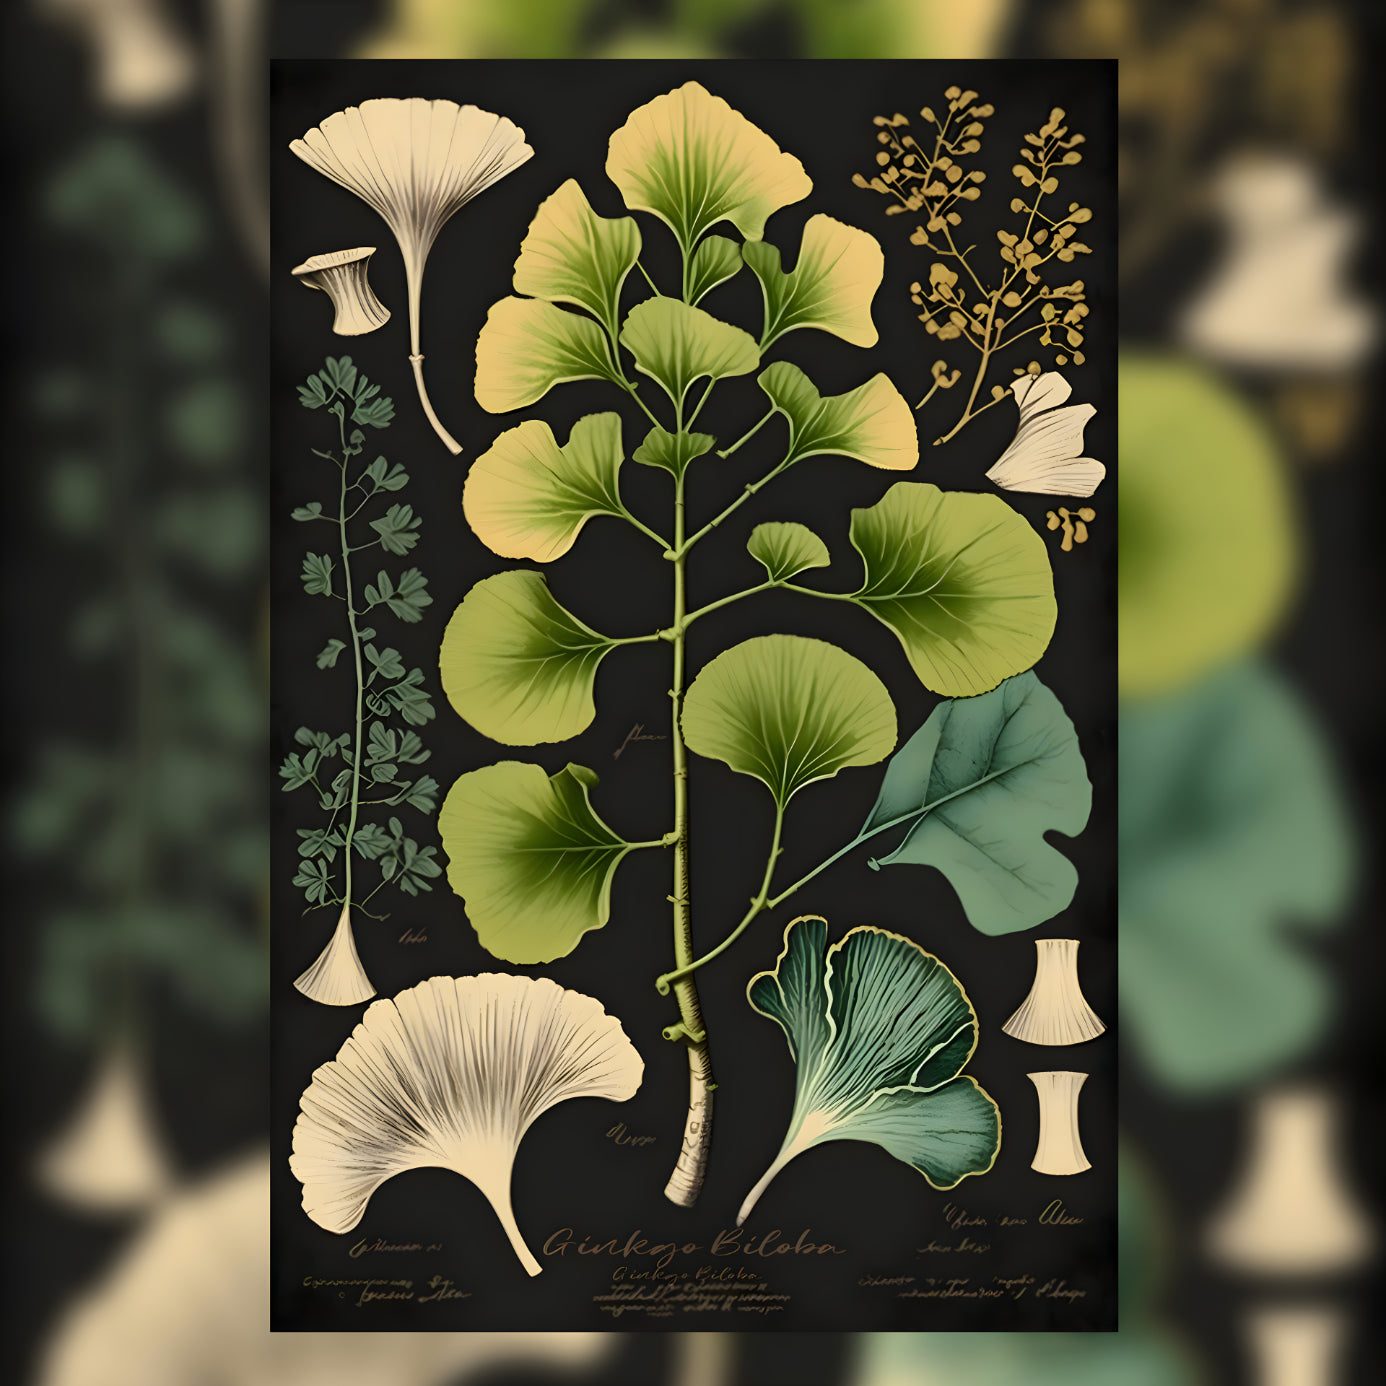 Dark Ginkgo Biloba Canvas Print - Herbal Art for Home or Office - Apothecary Decor